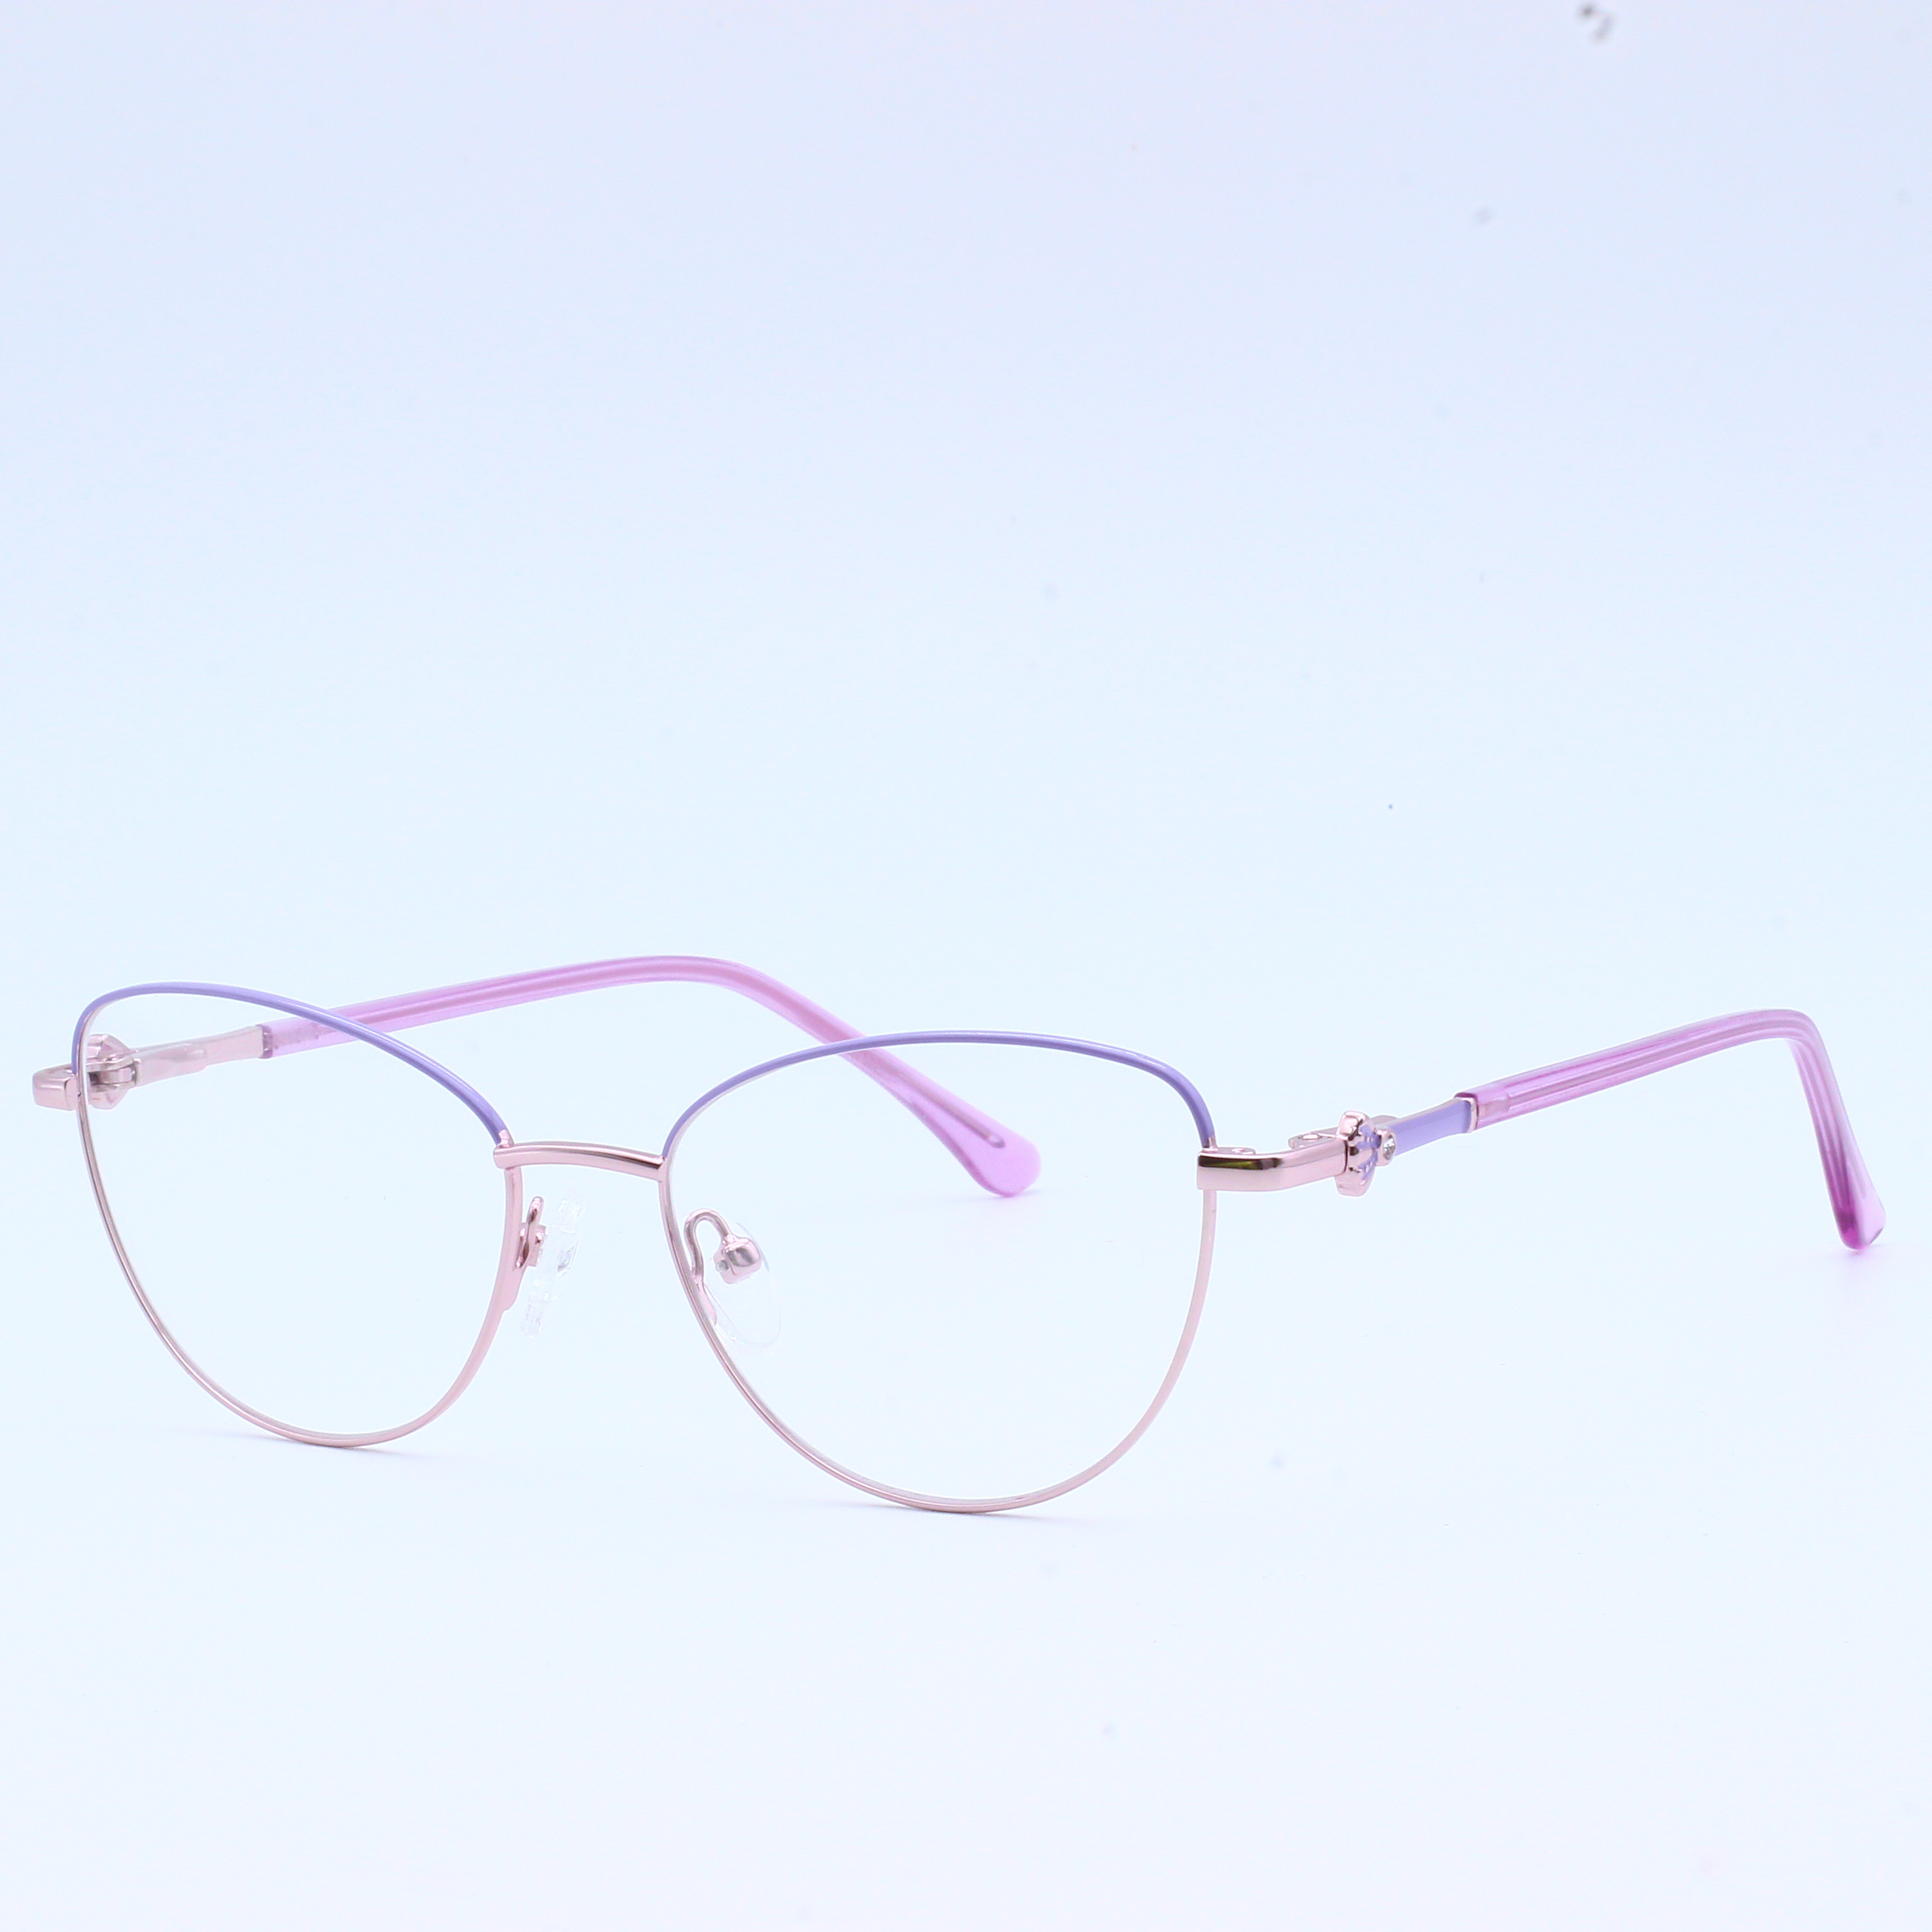 Metal Spring Hinge Cat Eye Glasses Frames (10)